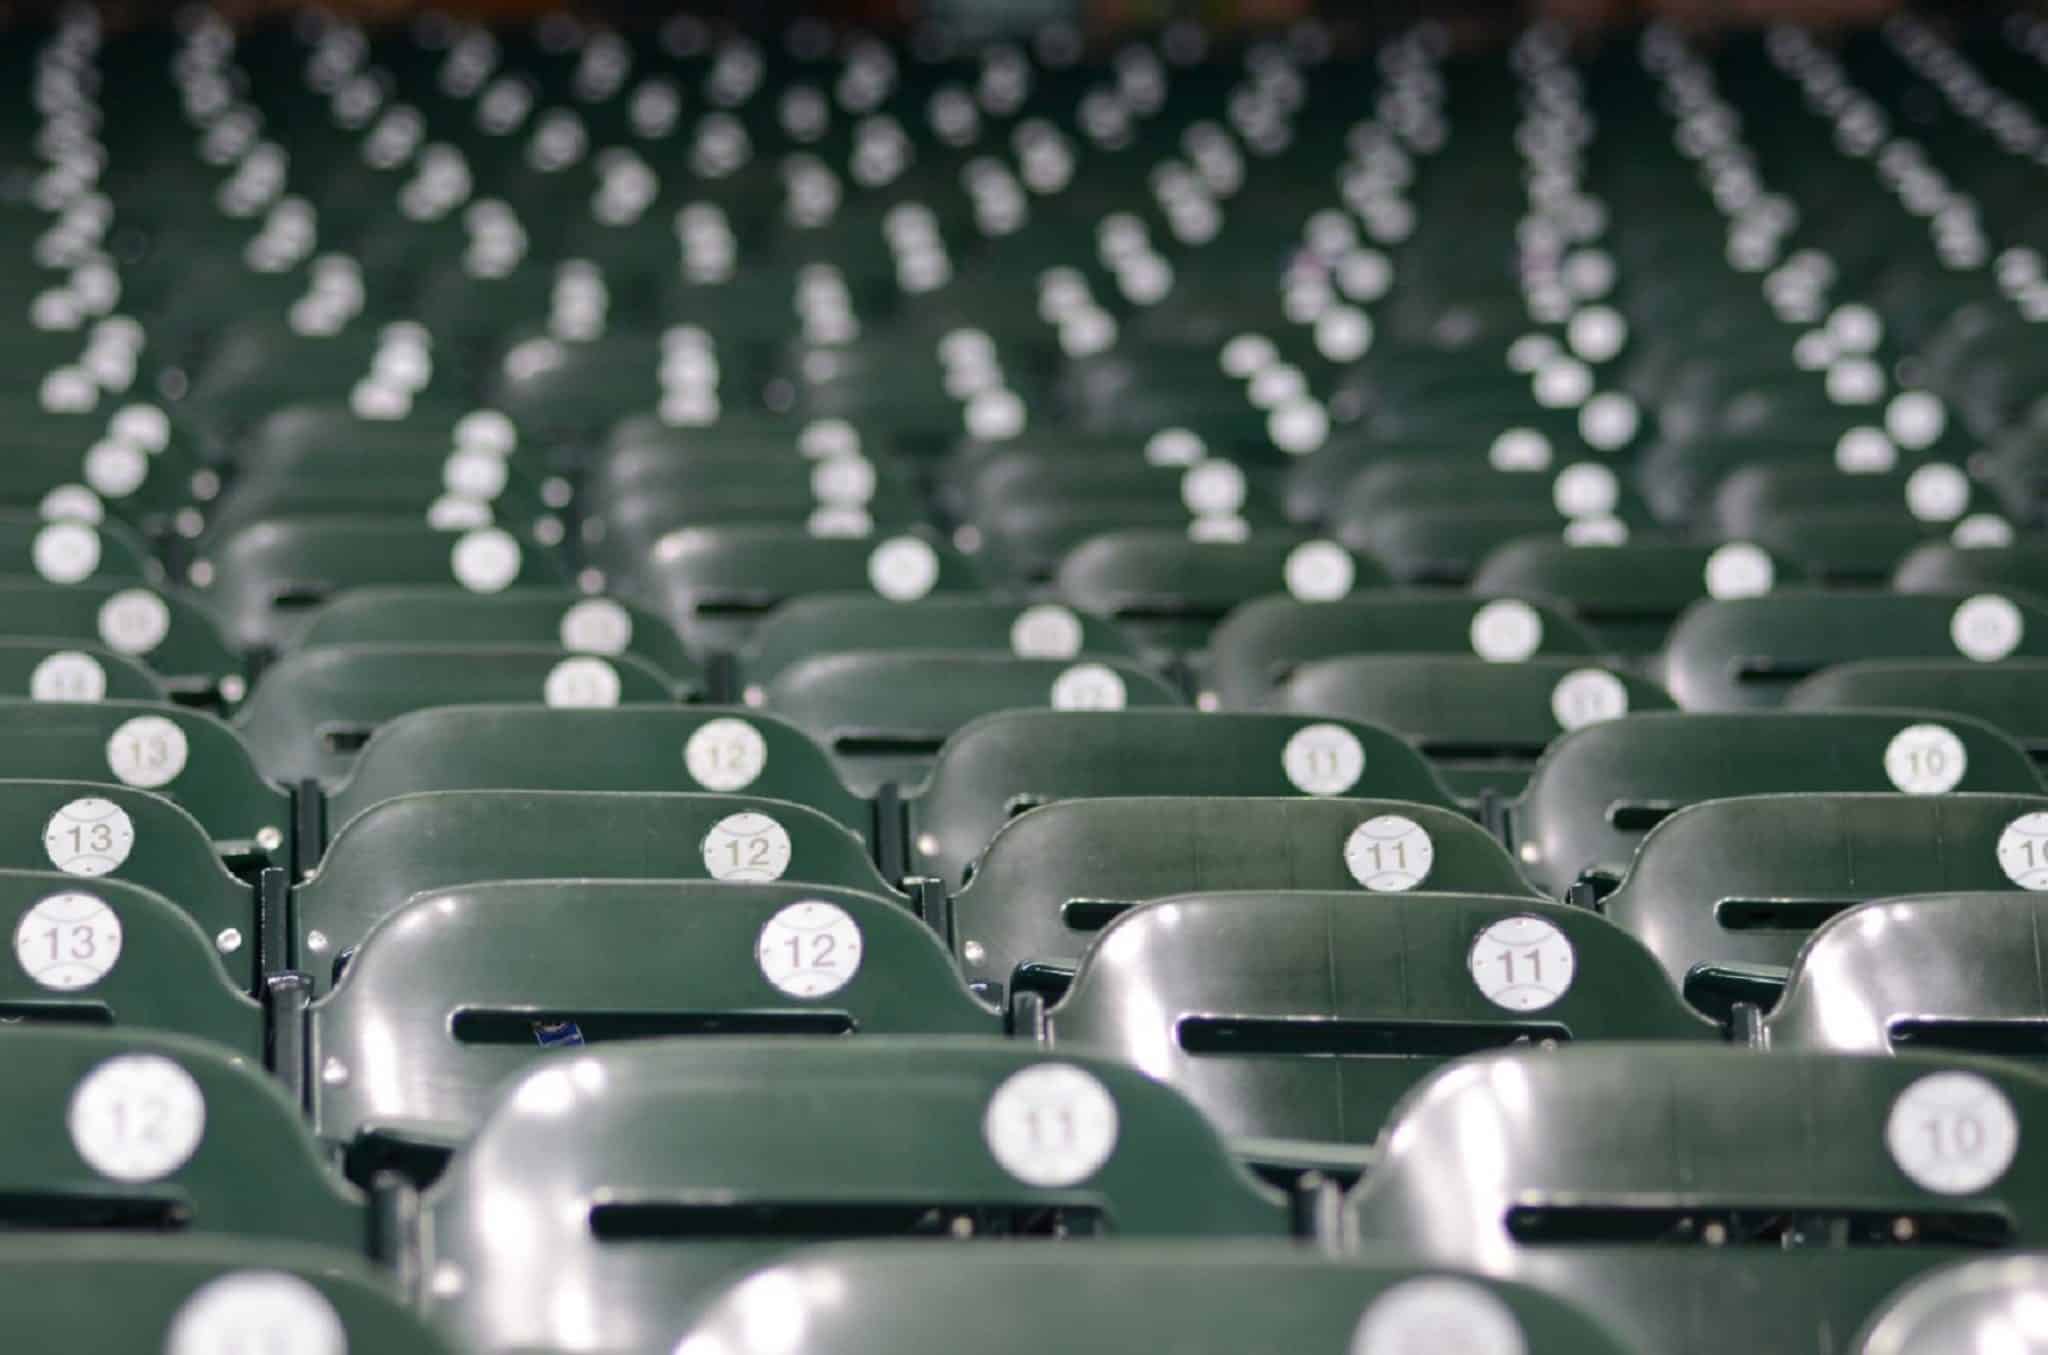 Rows of stadium seats